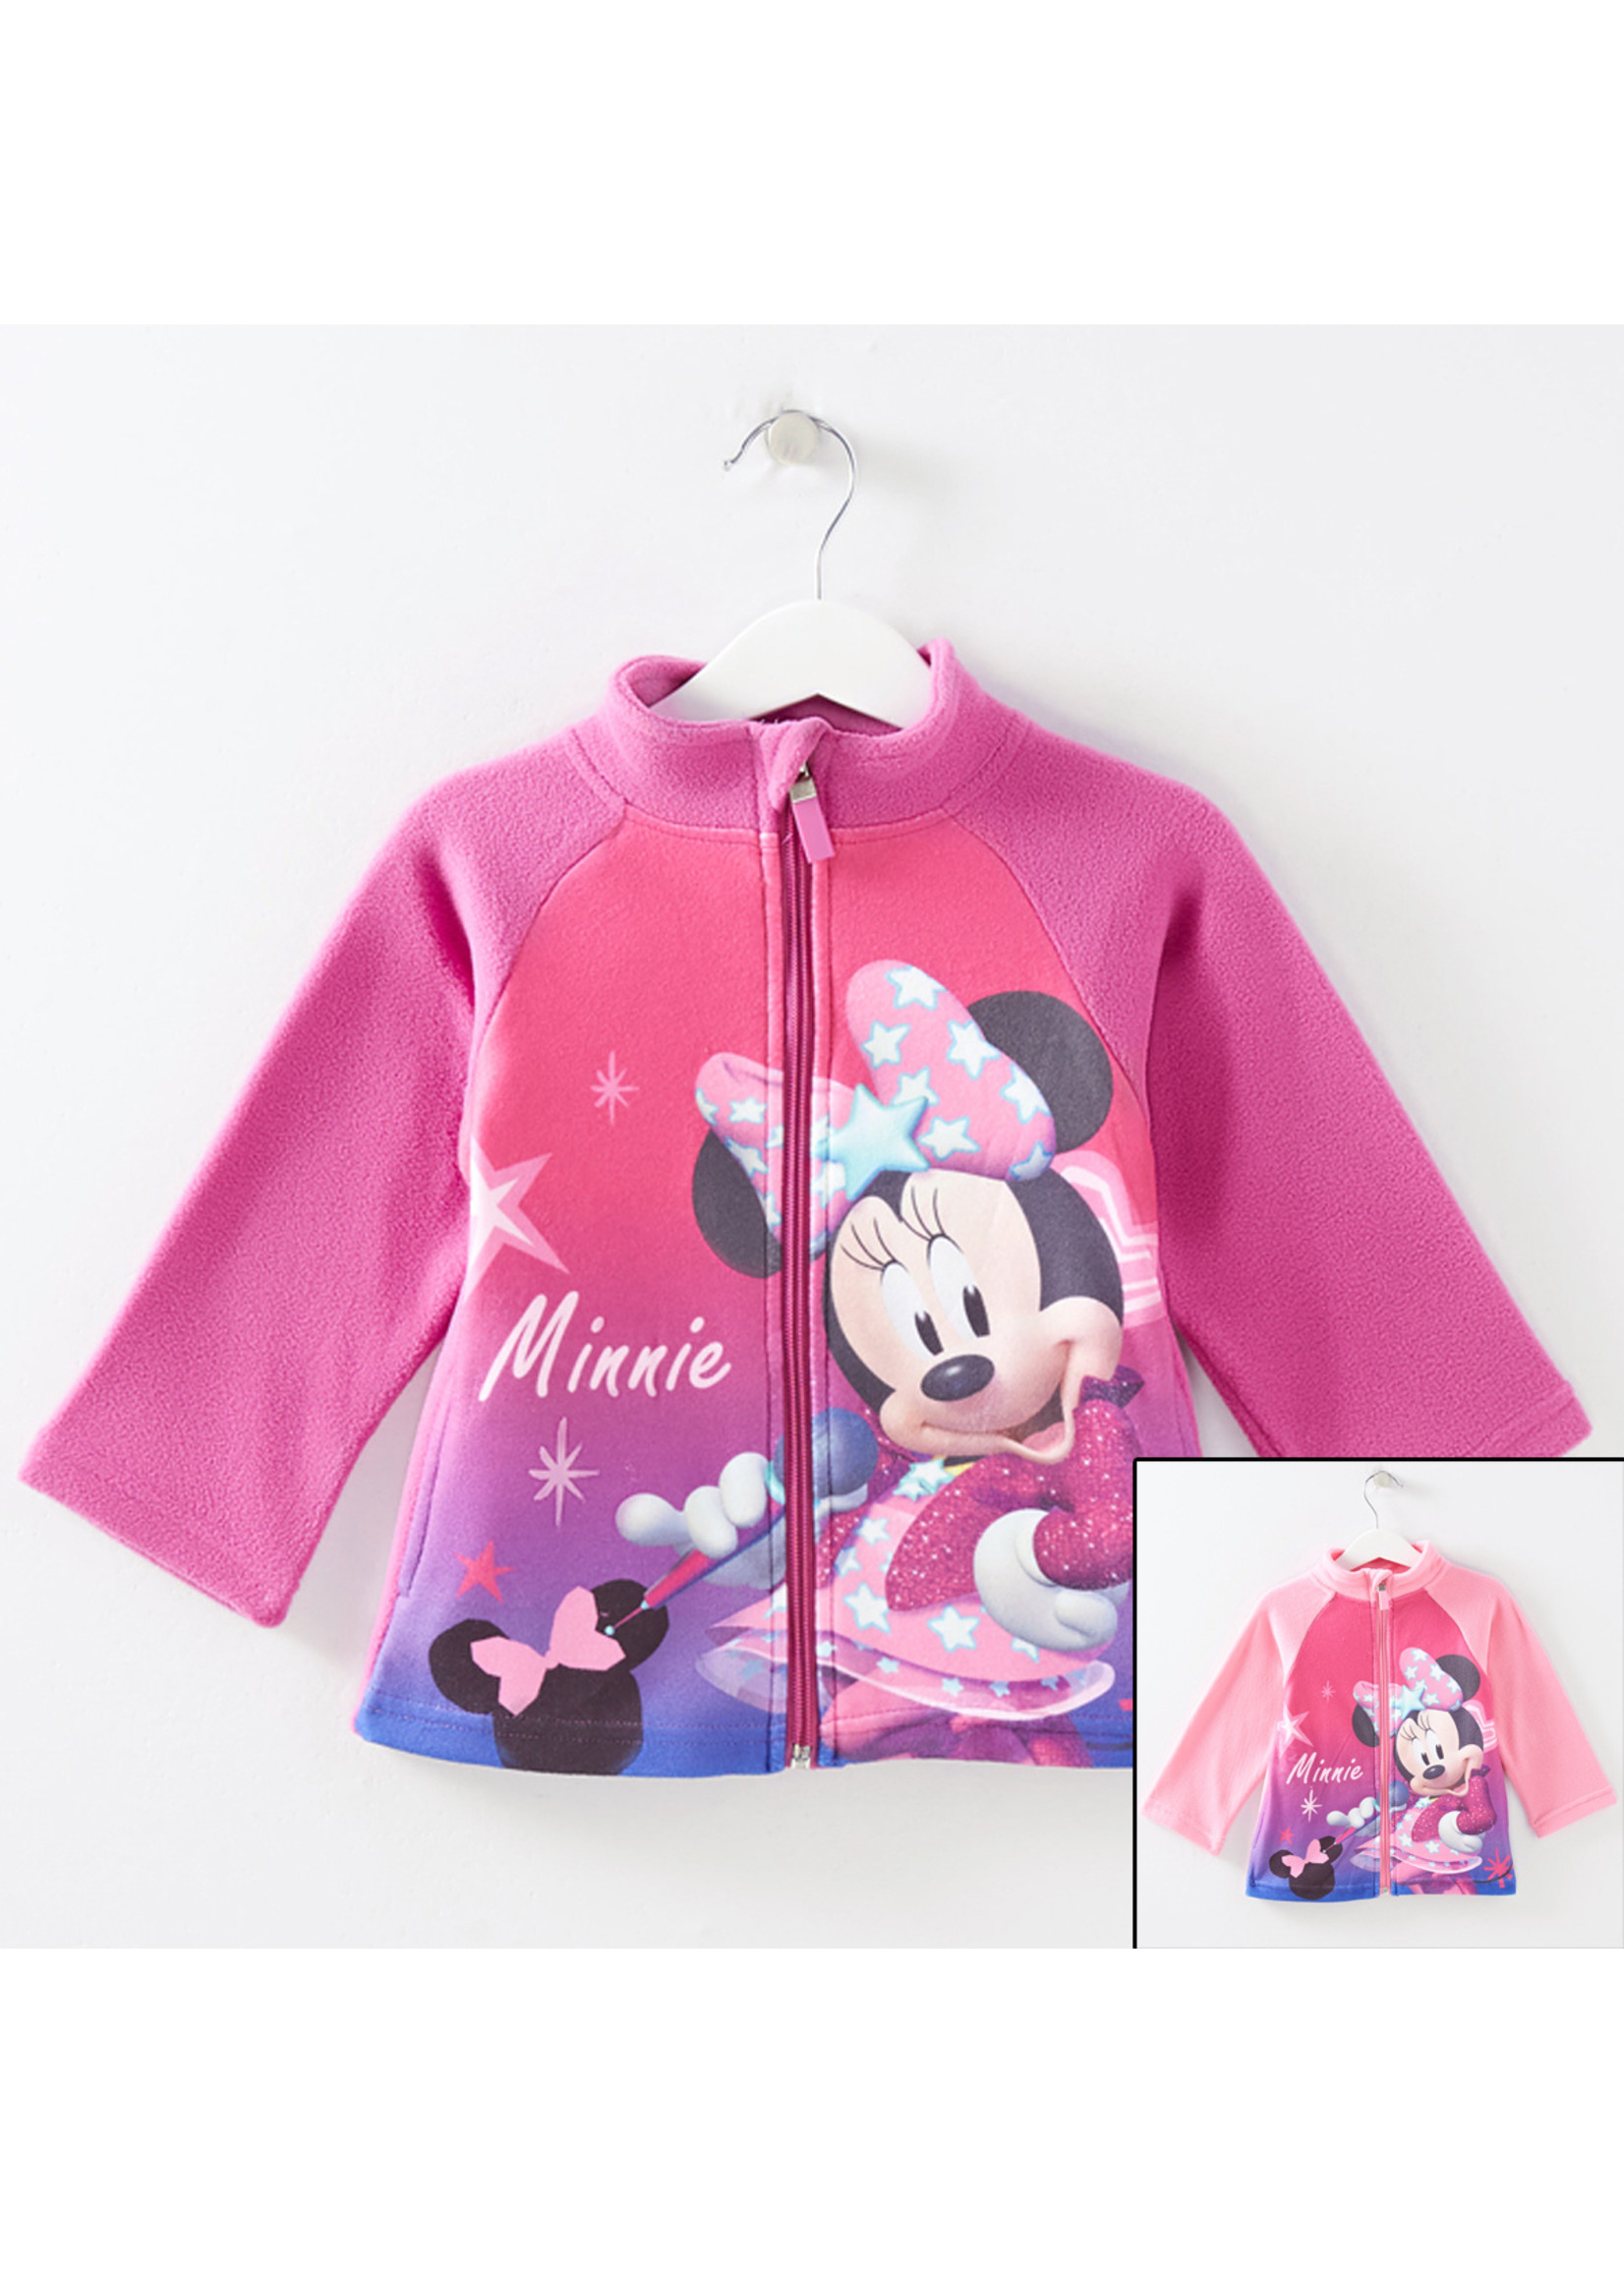 Disney junior Minnie Mouse fleece cardigan from Disney pink